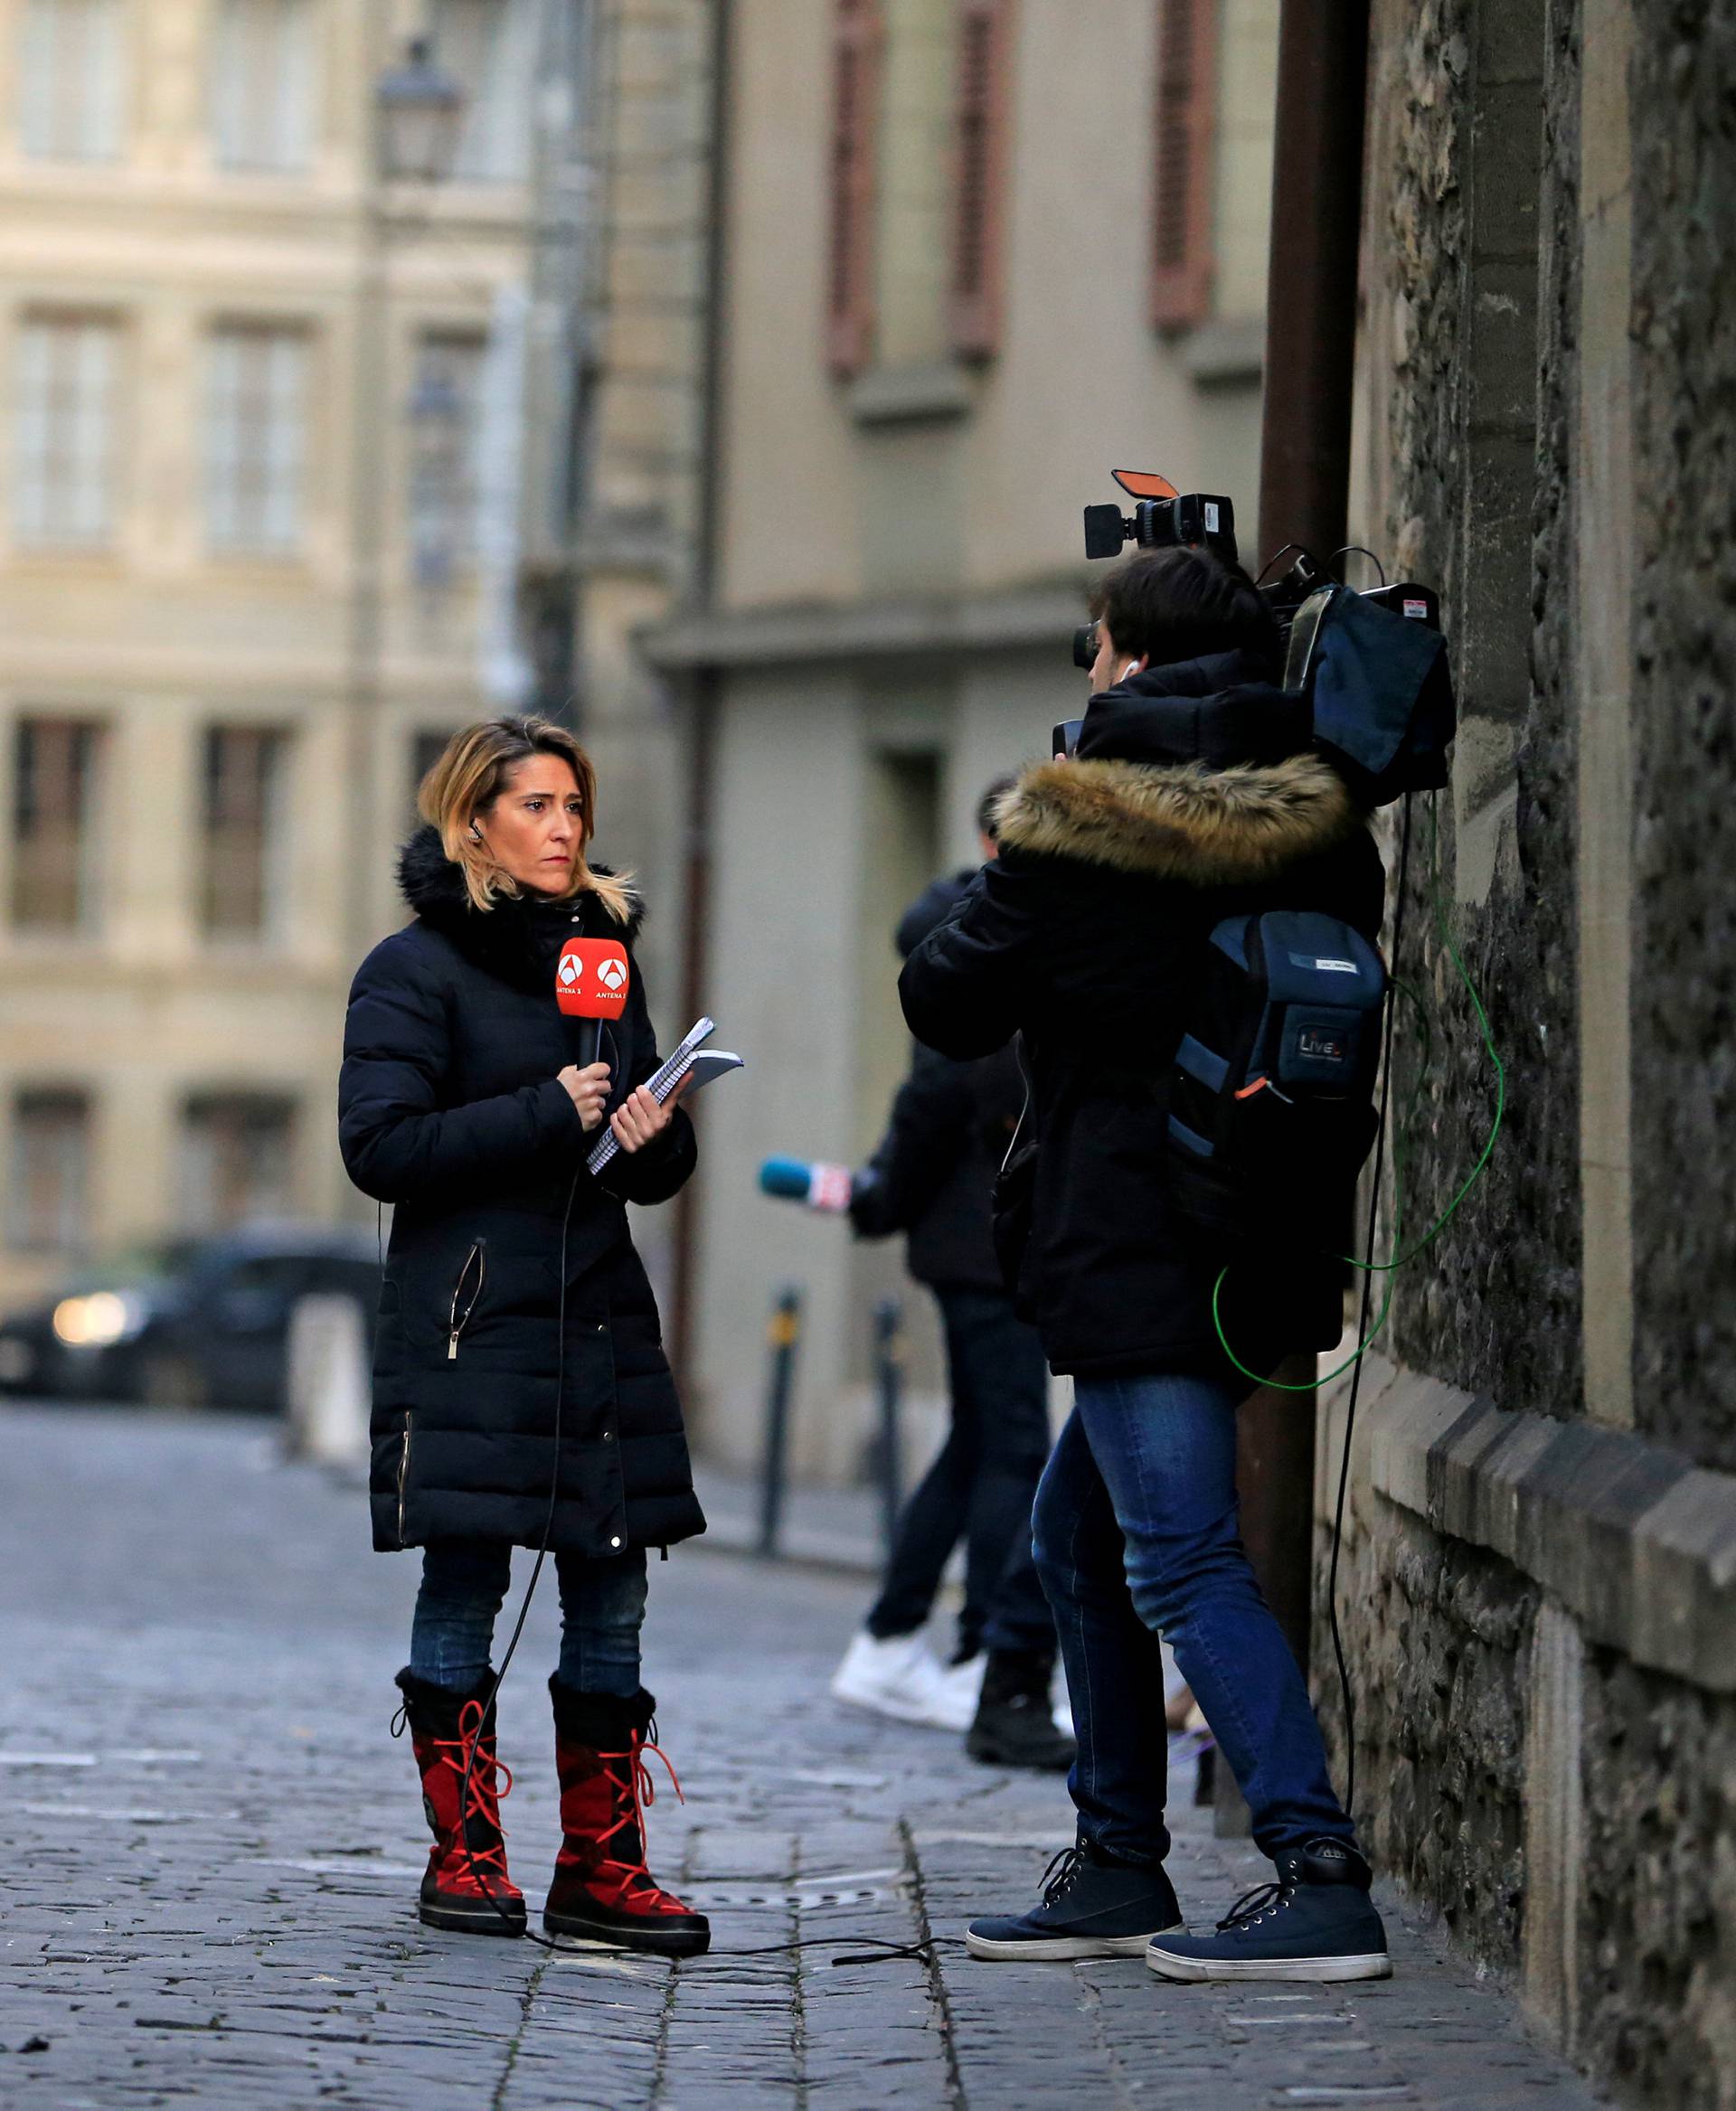 Journalists stand outside residence of Spain's Princess Cristina, sister of King Felipe VI in Geneva